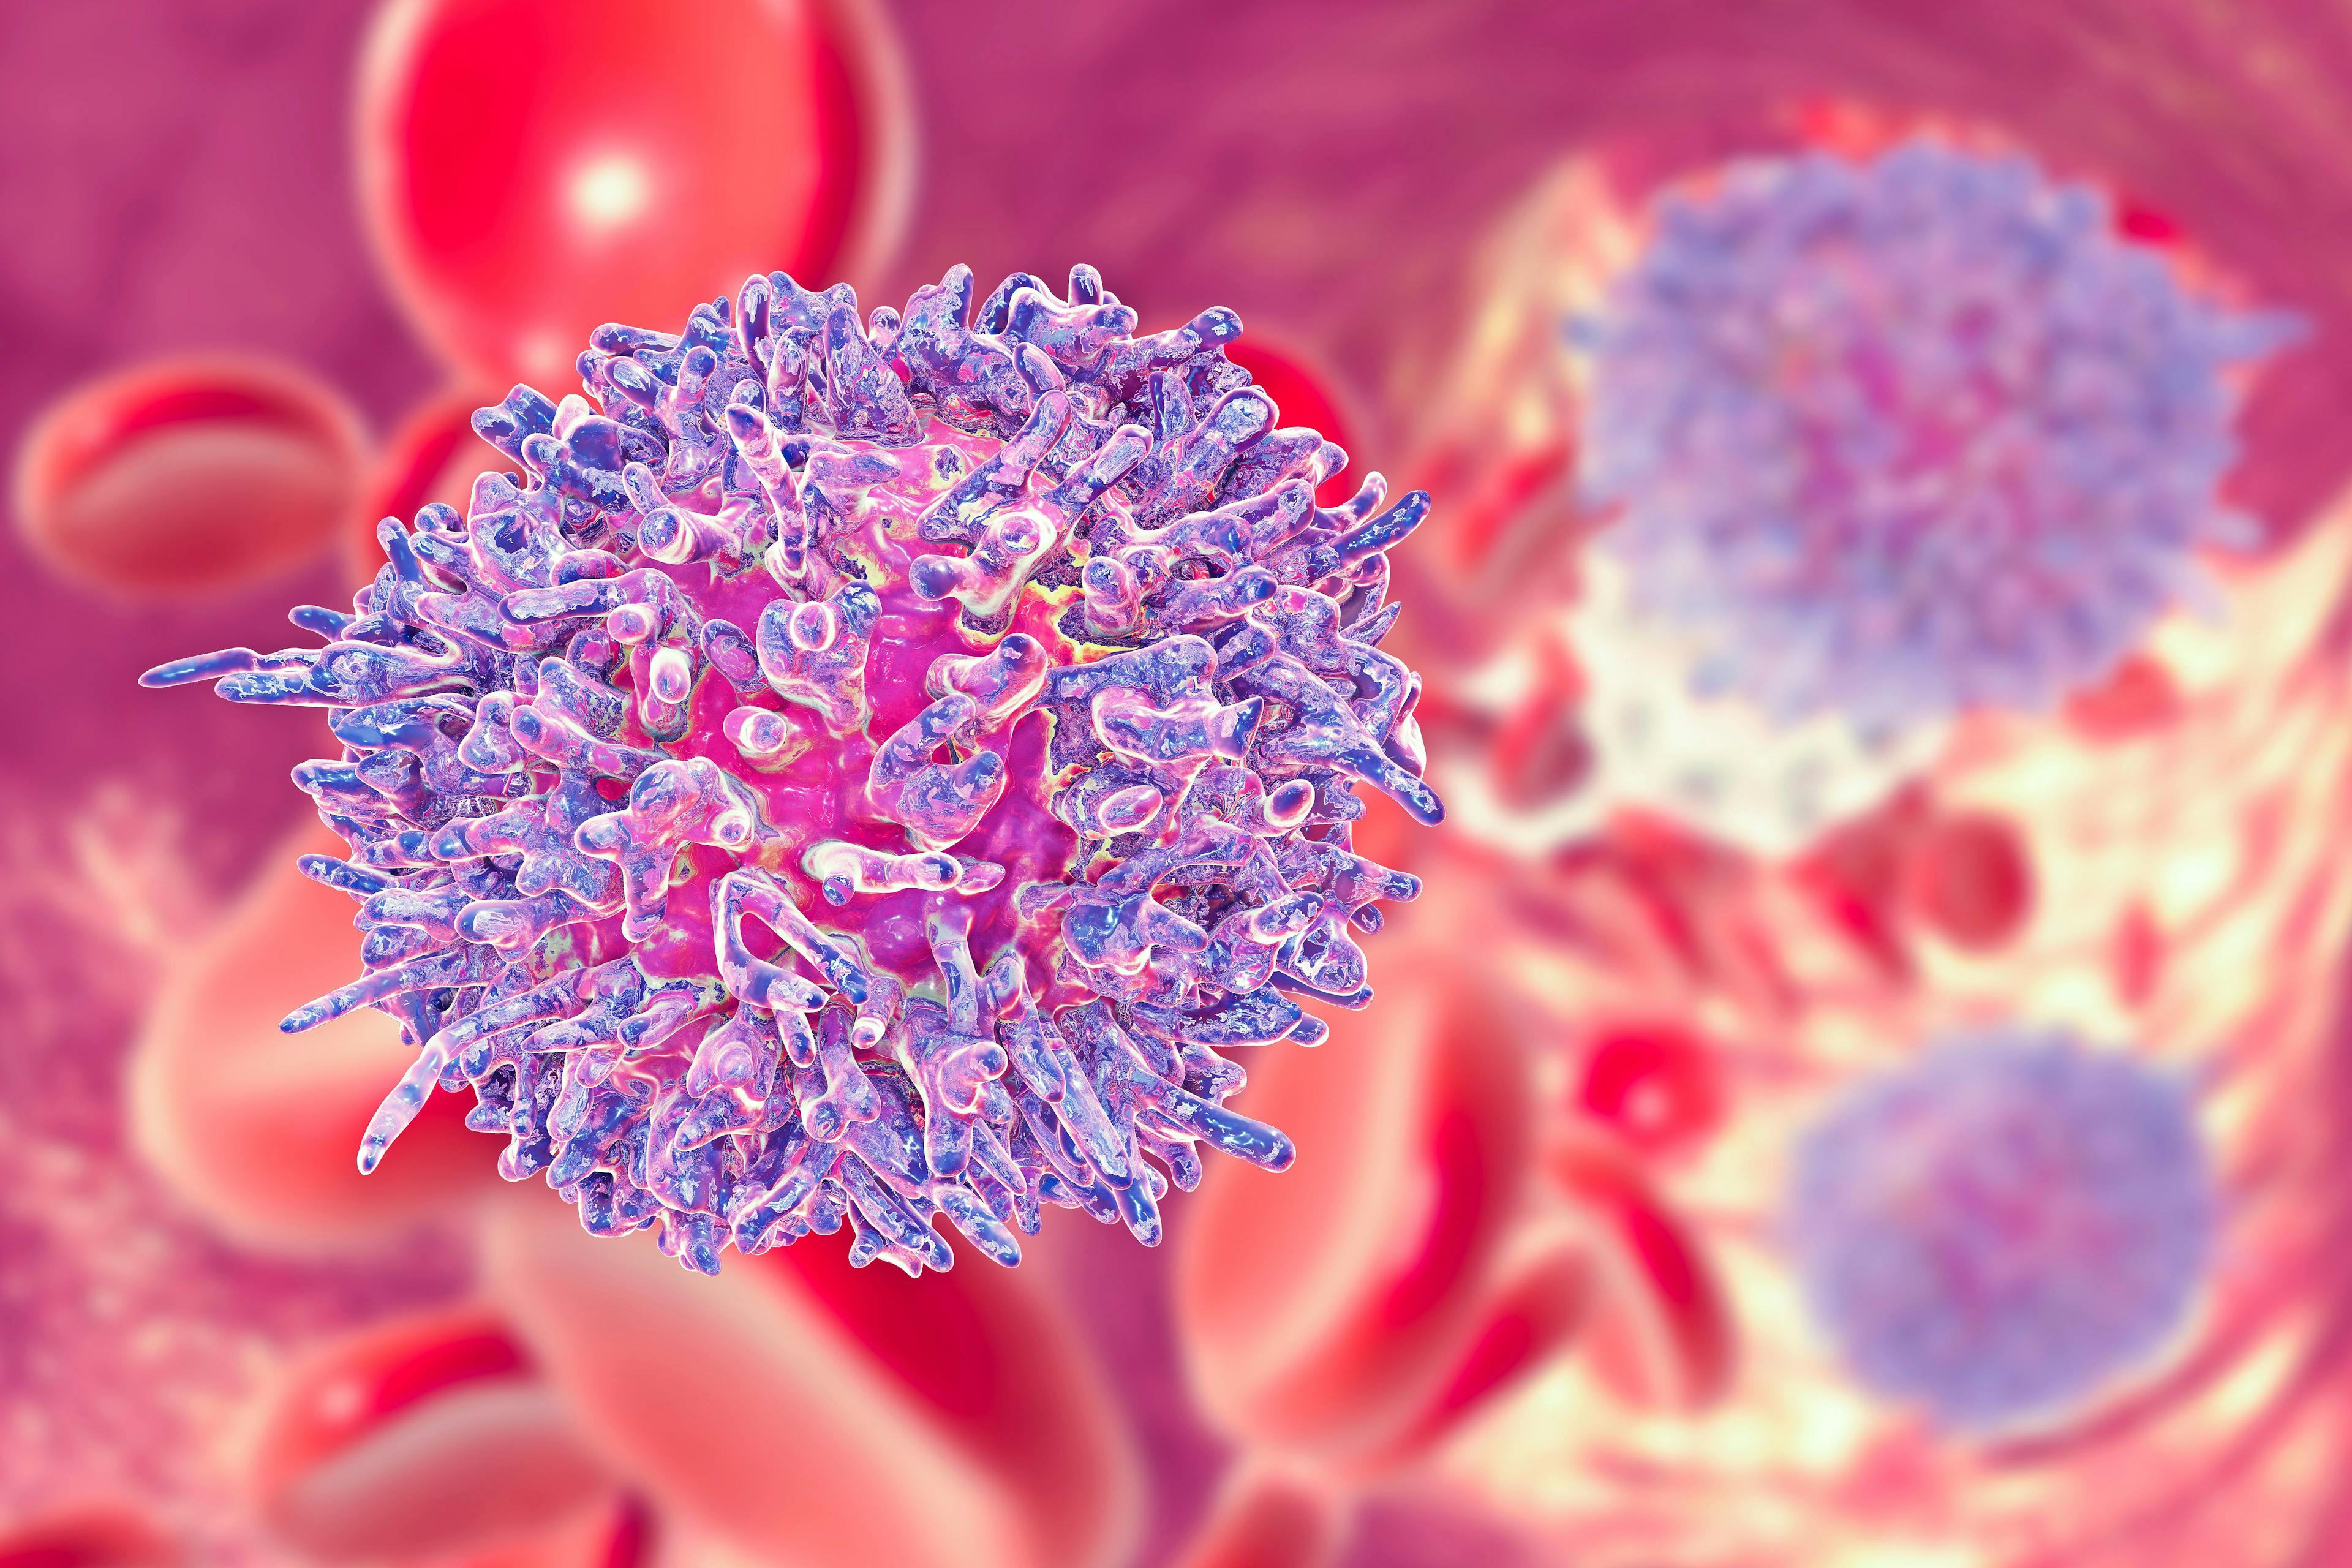 Image credit: Dr_Microbe | stock.adobe.com. Hairy cell leukemia, 3D illustration. It is a hematological malignancy, chronic lymphocytic leukemia, with accumulation of abnormal B lymphocytes